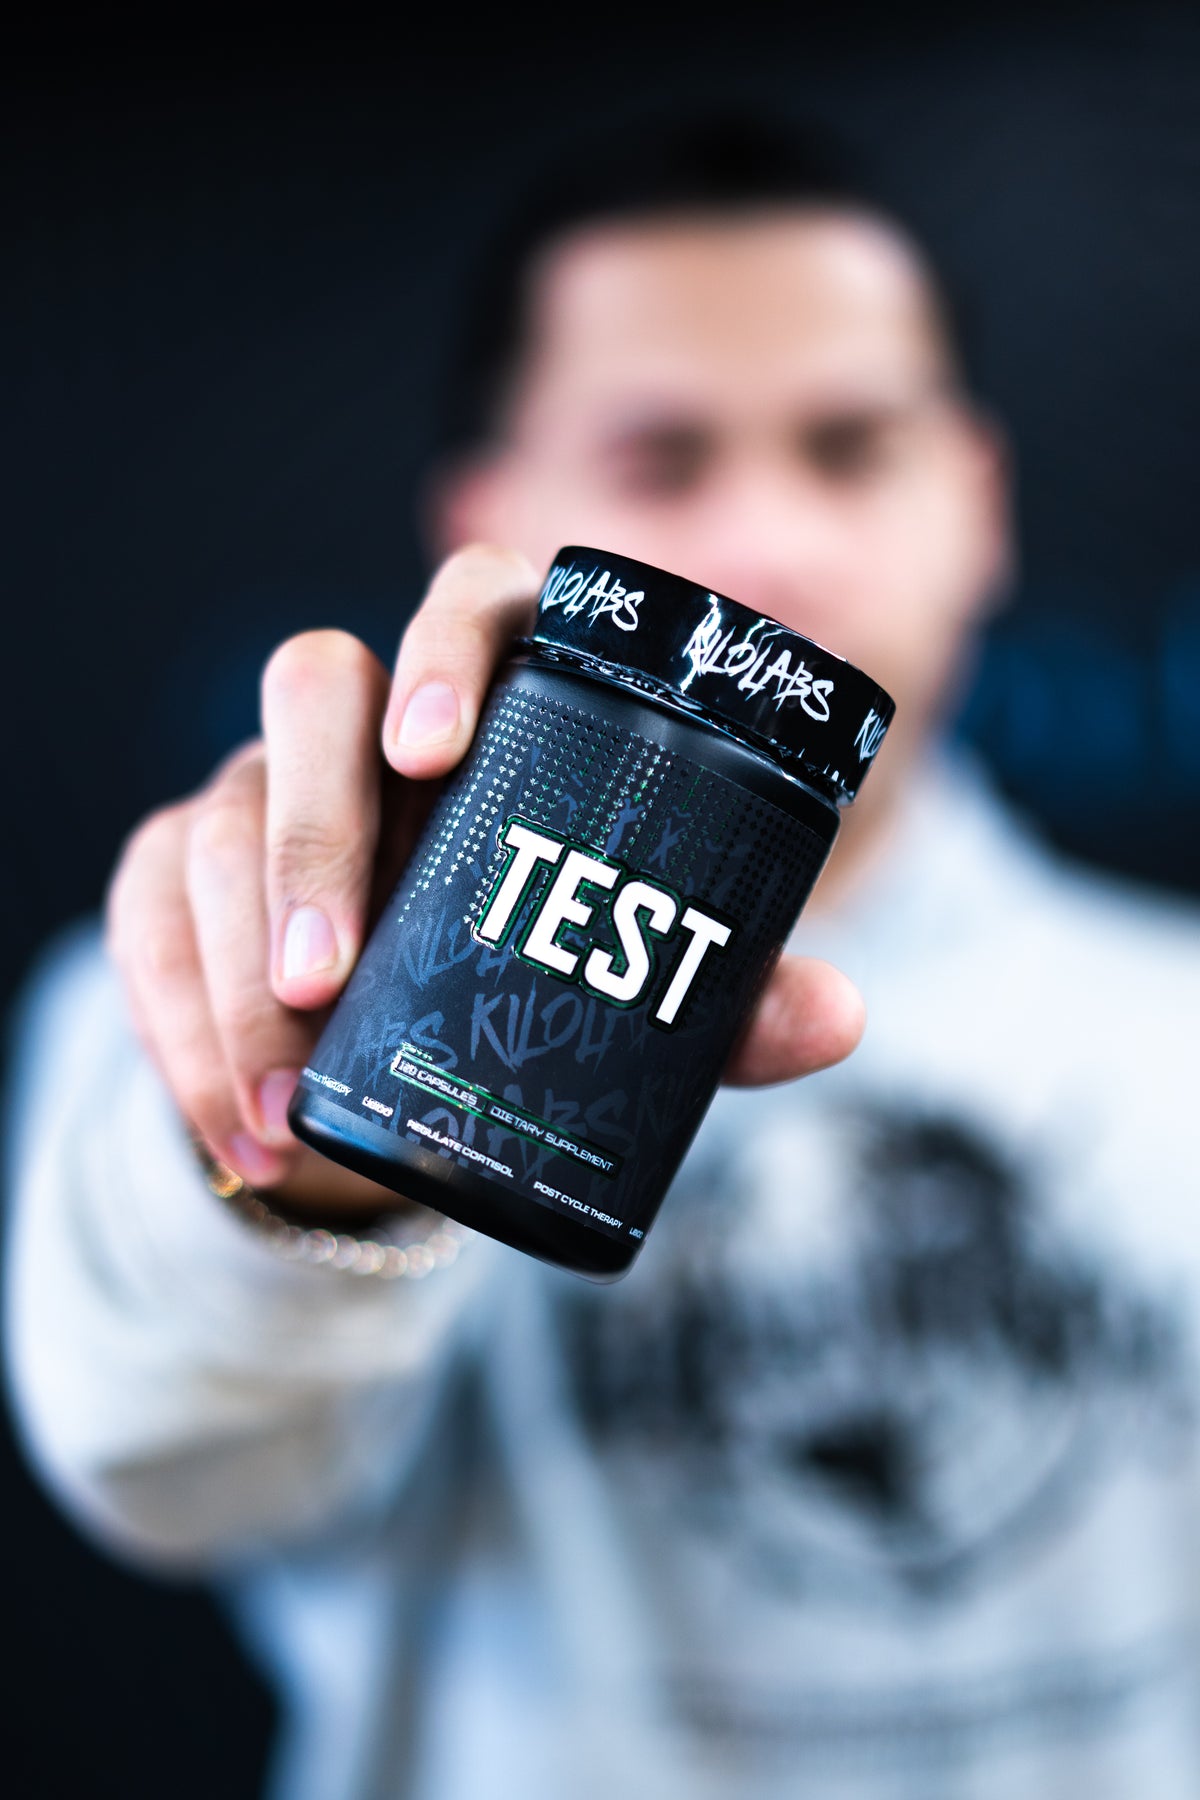 Test | Testosterone Booster